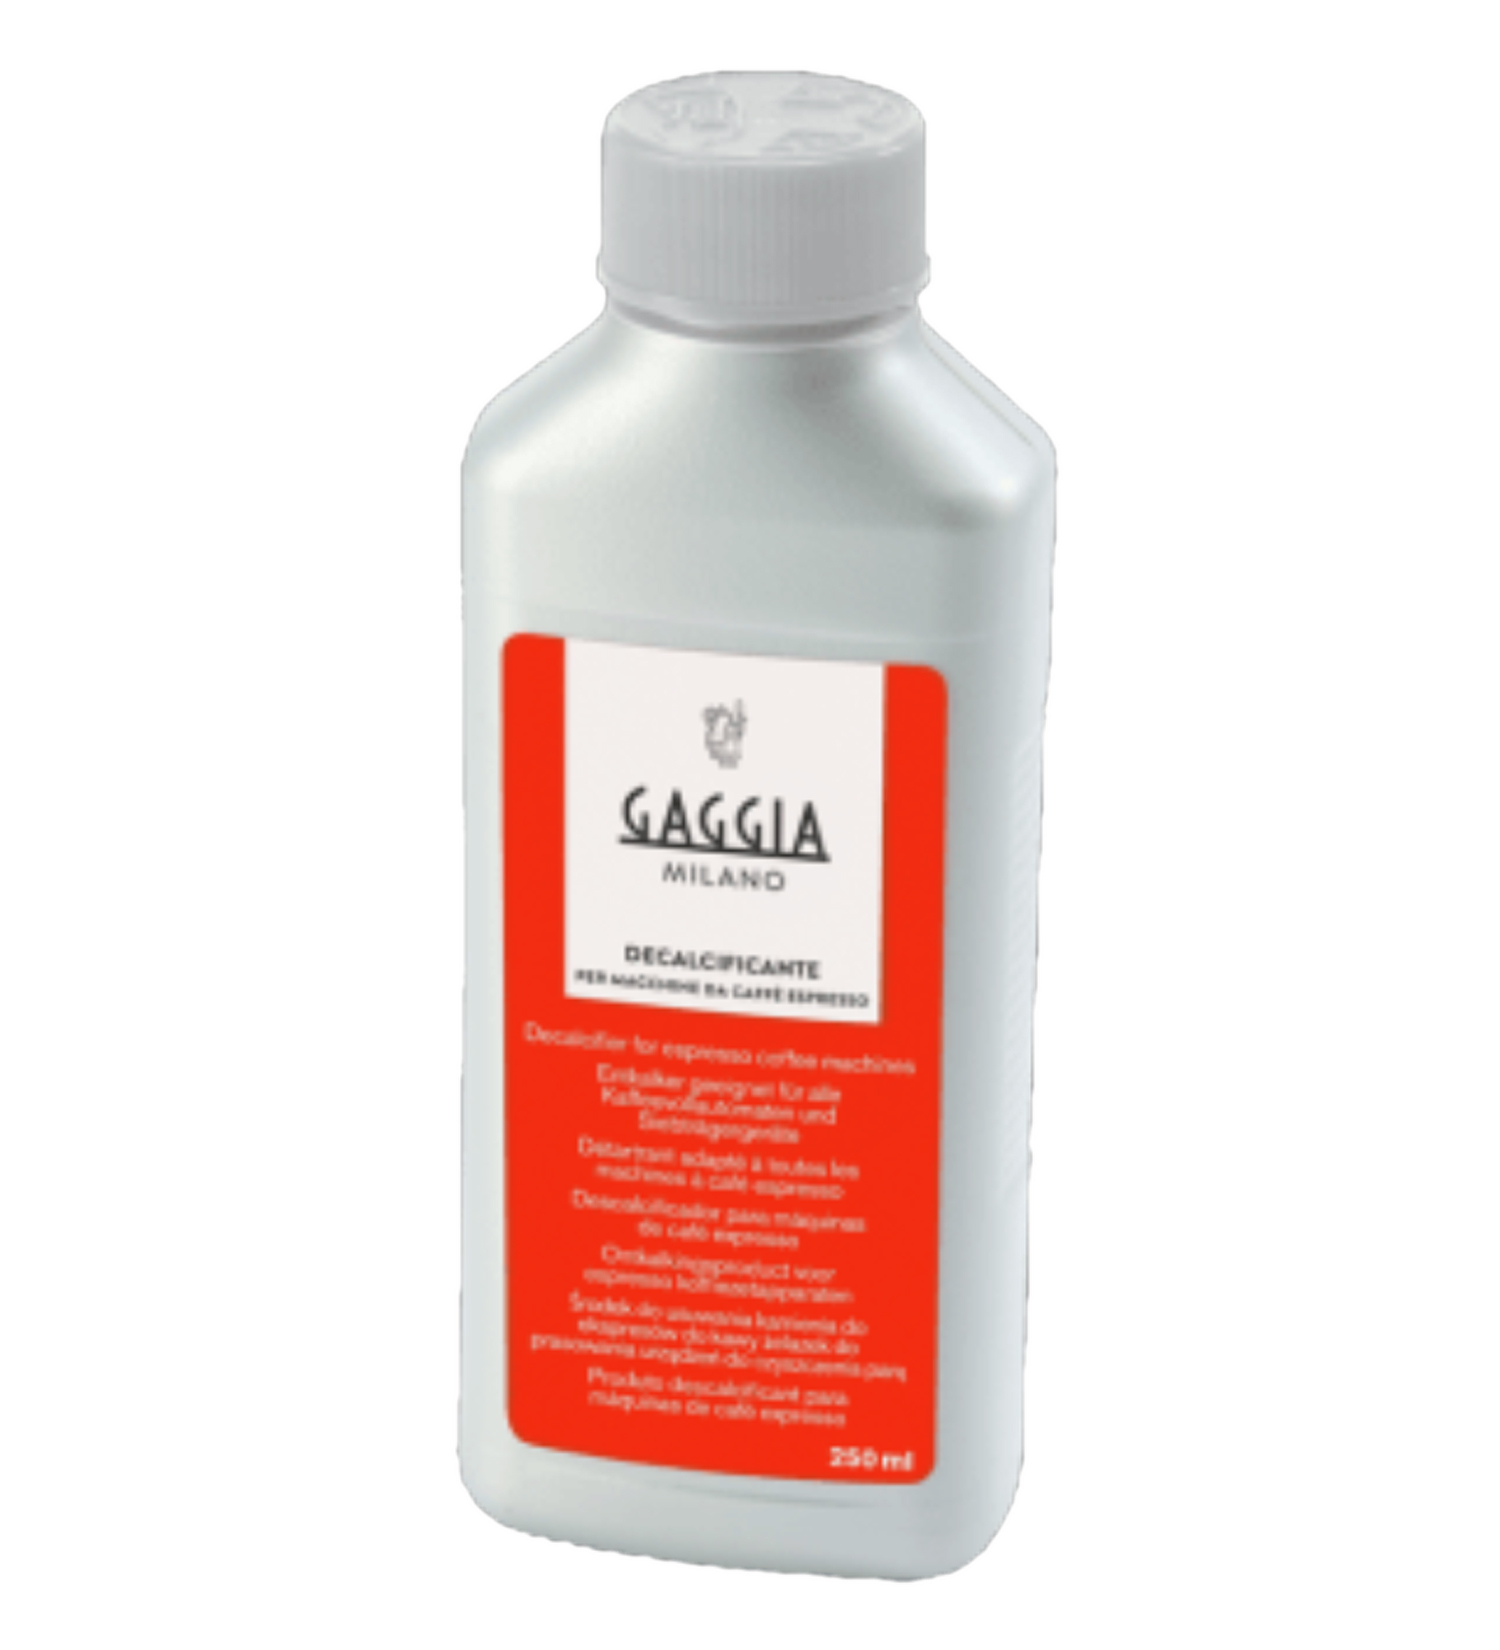 Gaggia Cleaner GA-21001681